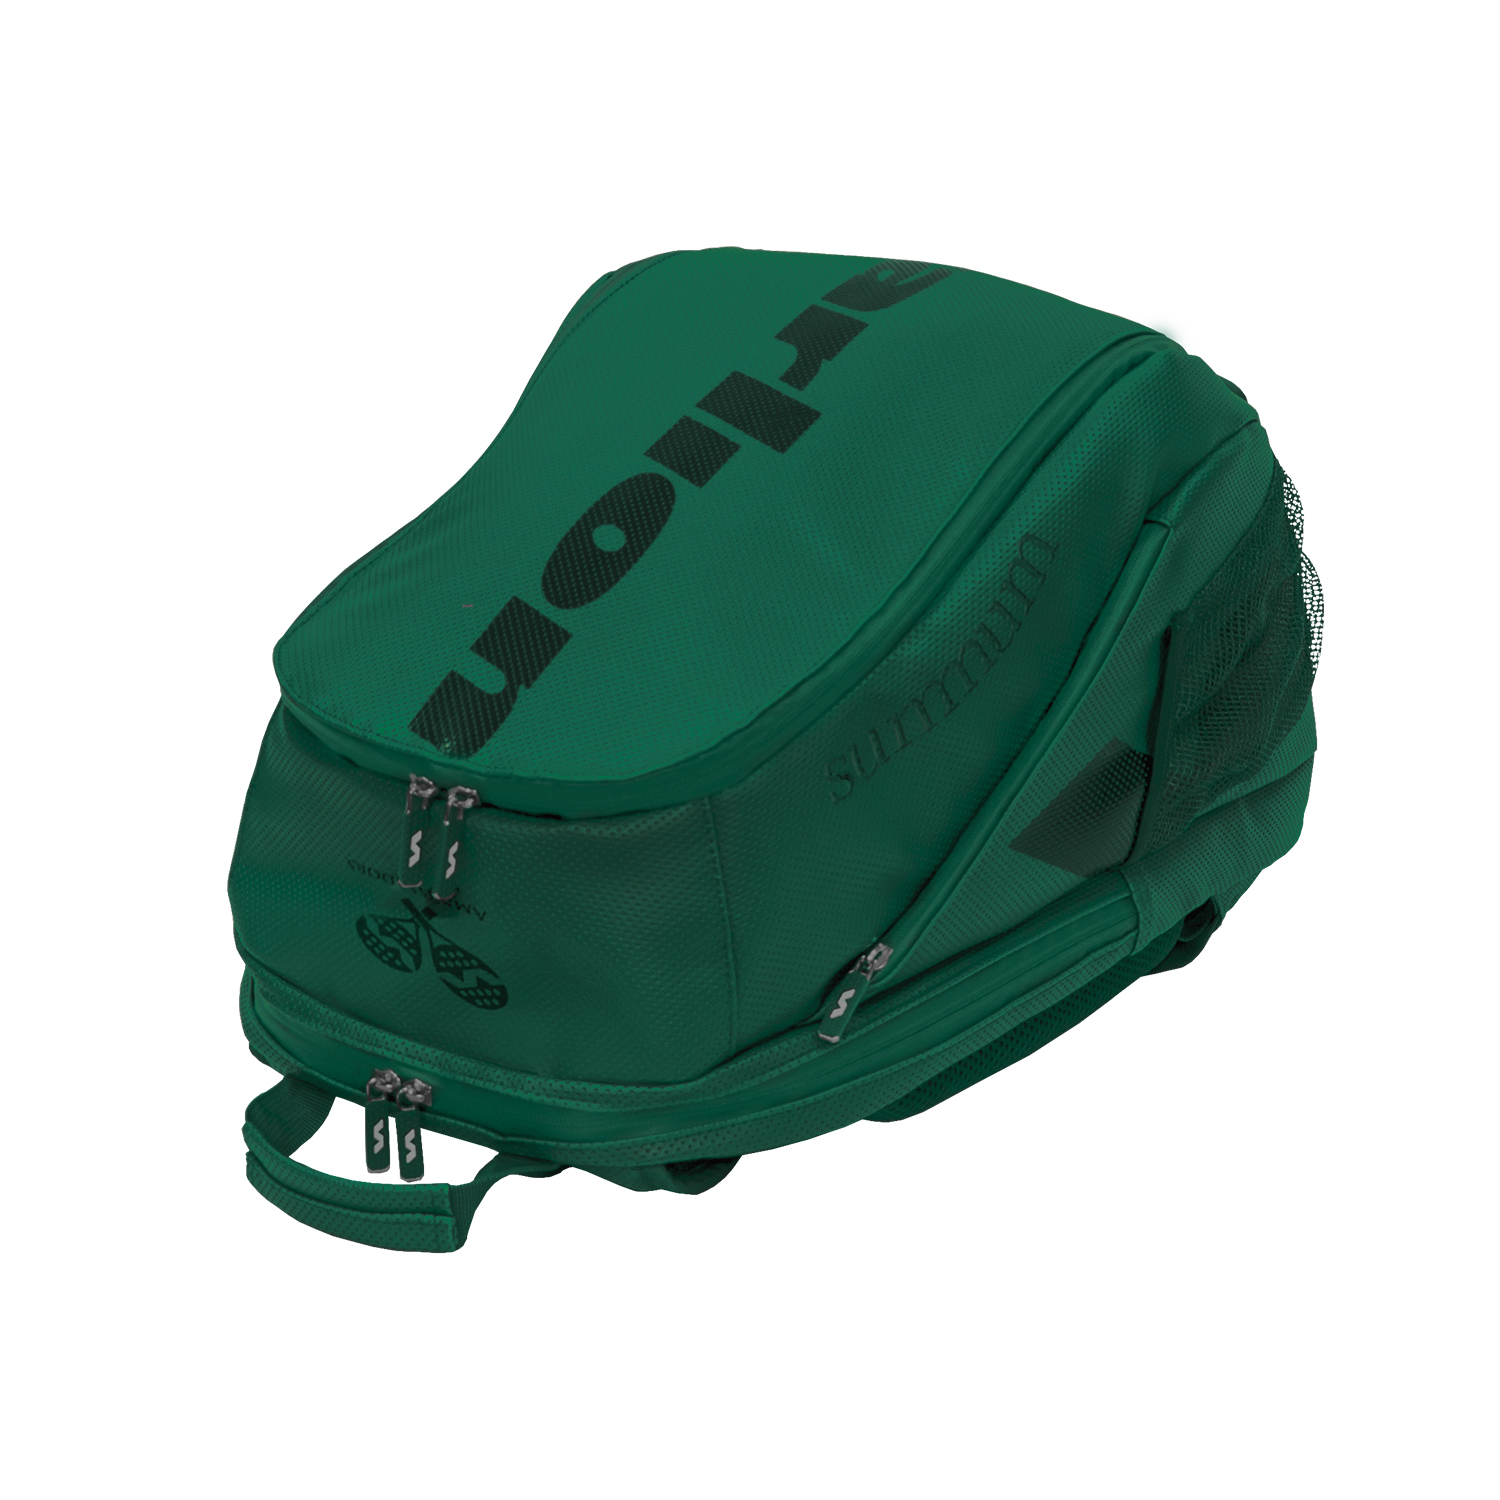 Varlion Ambassadors Backpack - Dark Green